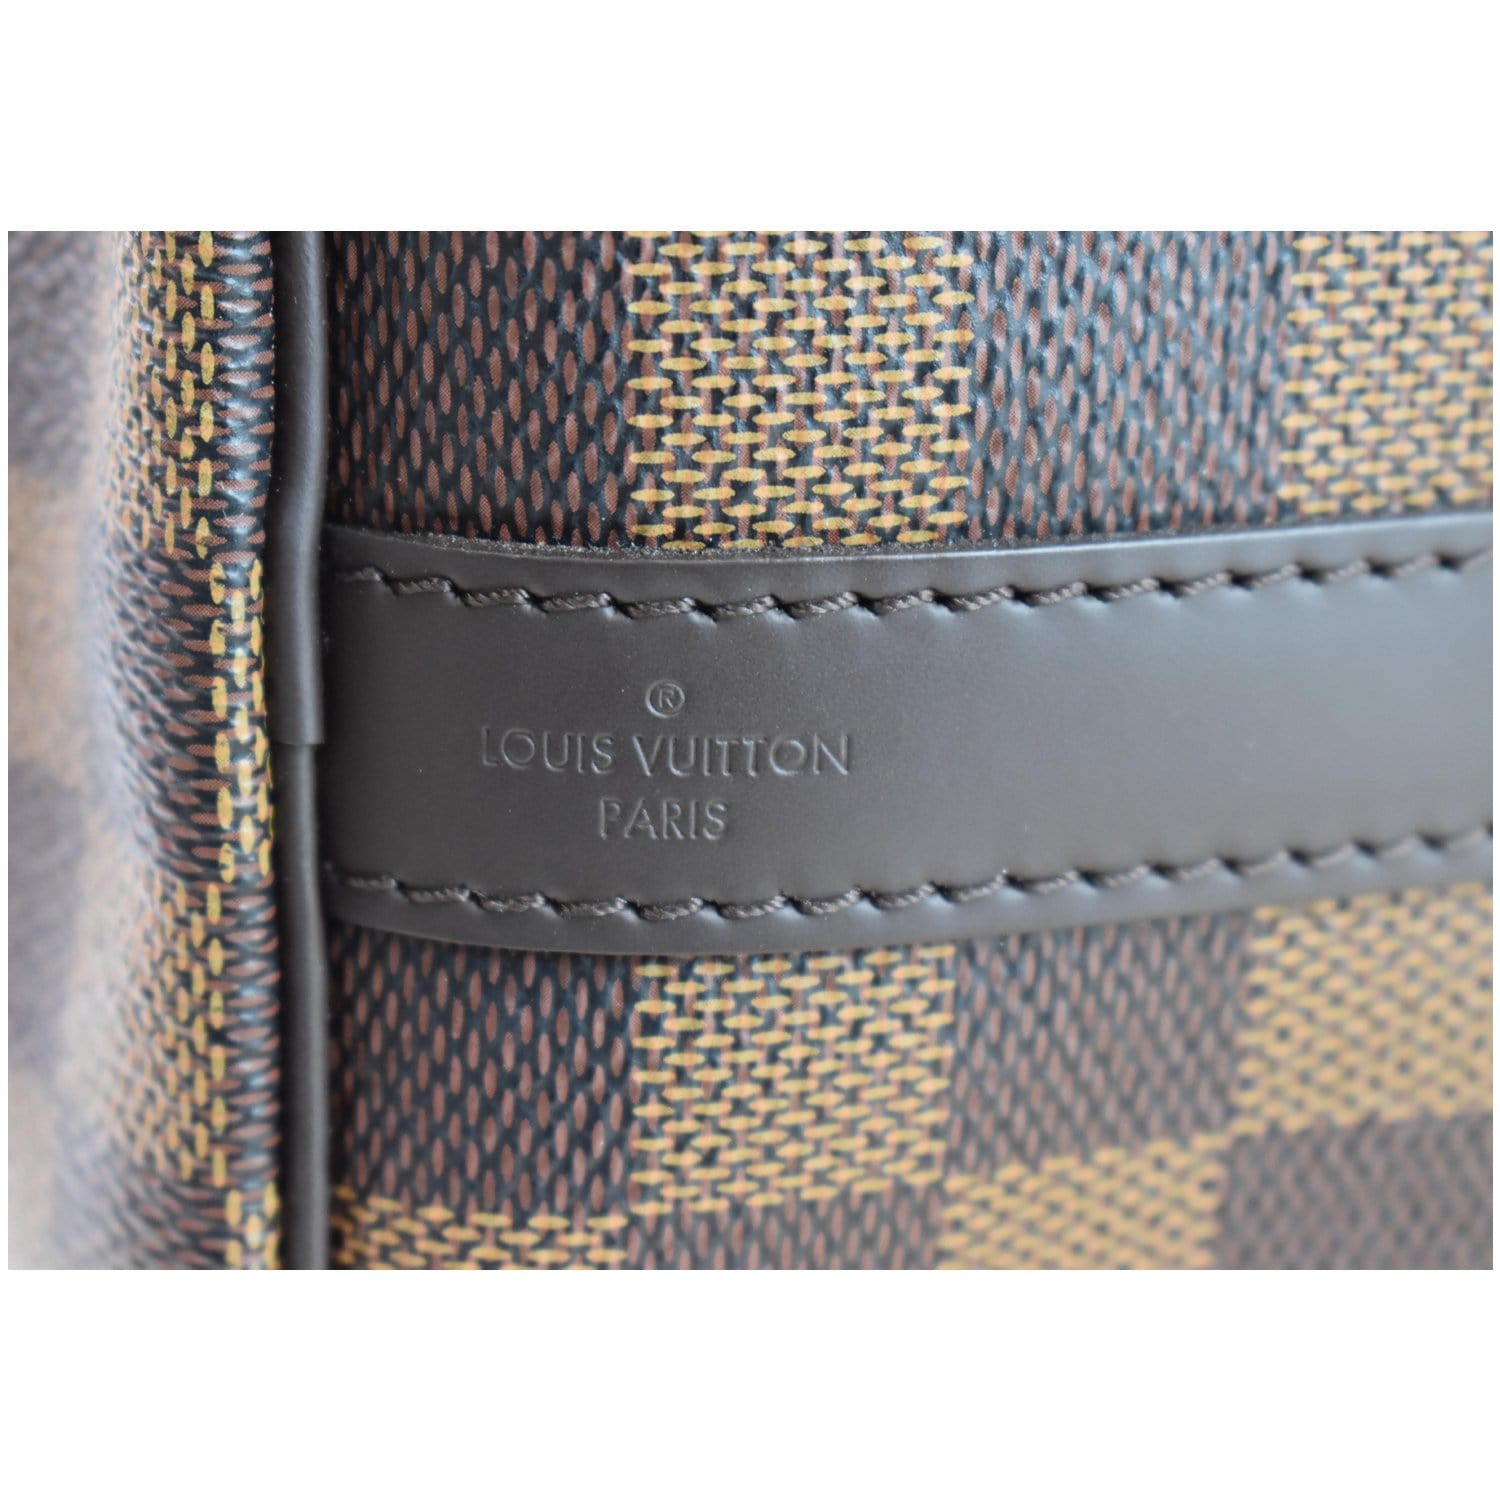 Louis Vuitton Speedy Bandouliere 25 Damier Ebene - THE PURSE AFFAIR